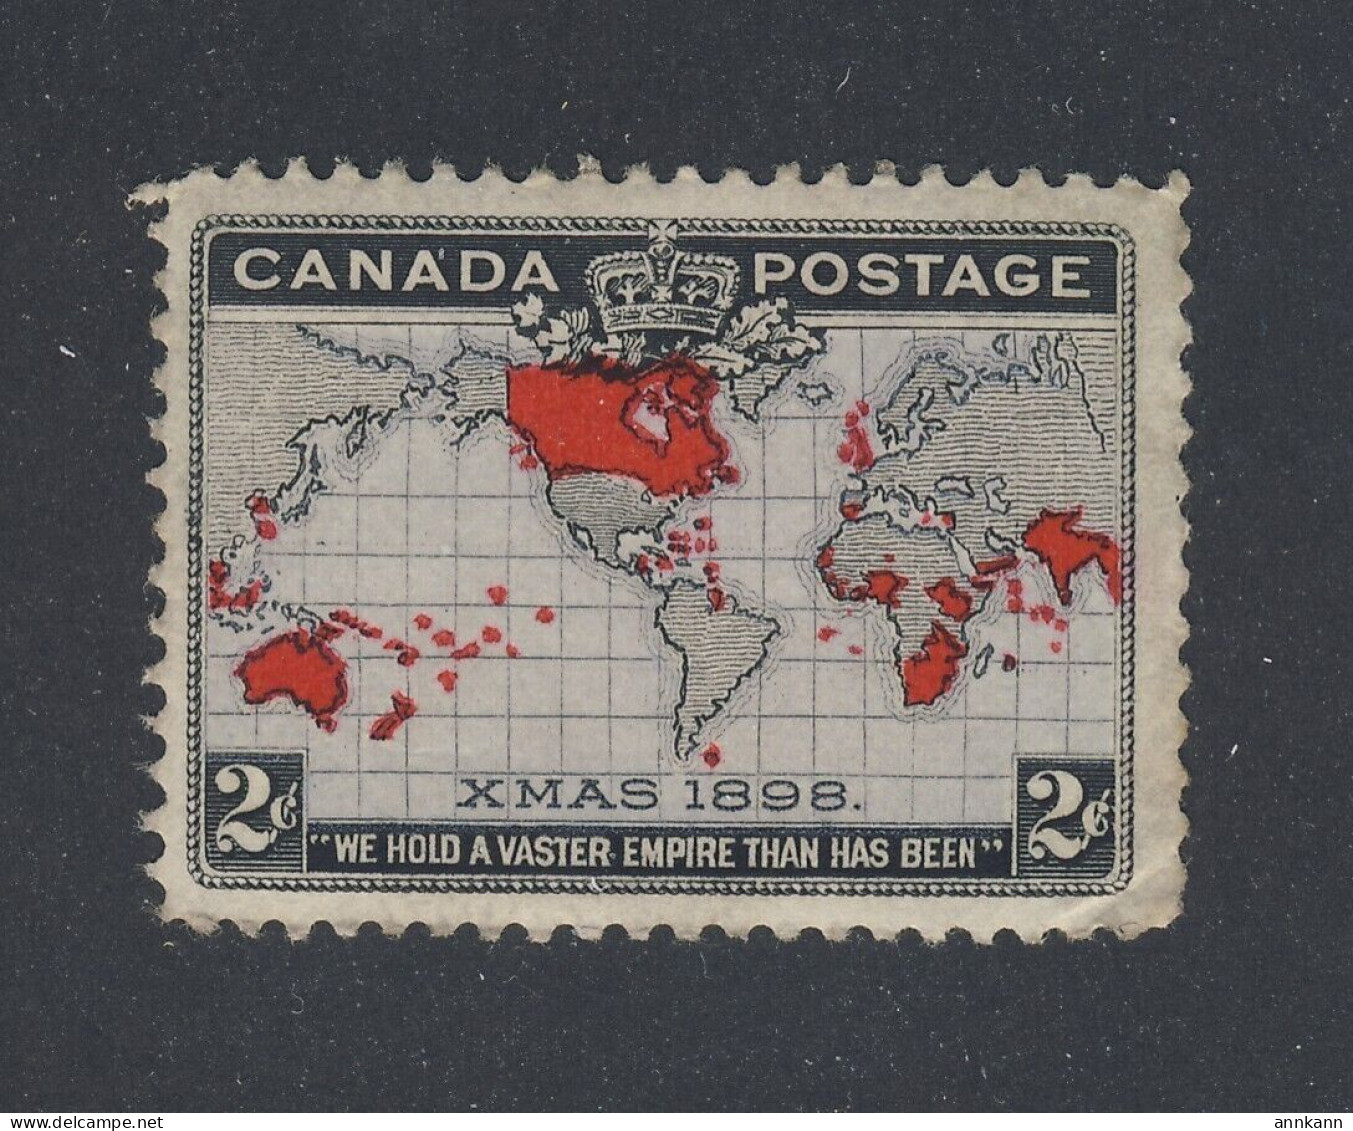 Canada 1898 Xmas Stamp; #86-2c MNH F/VF Guide Value = $55.00 - Ongebruikt